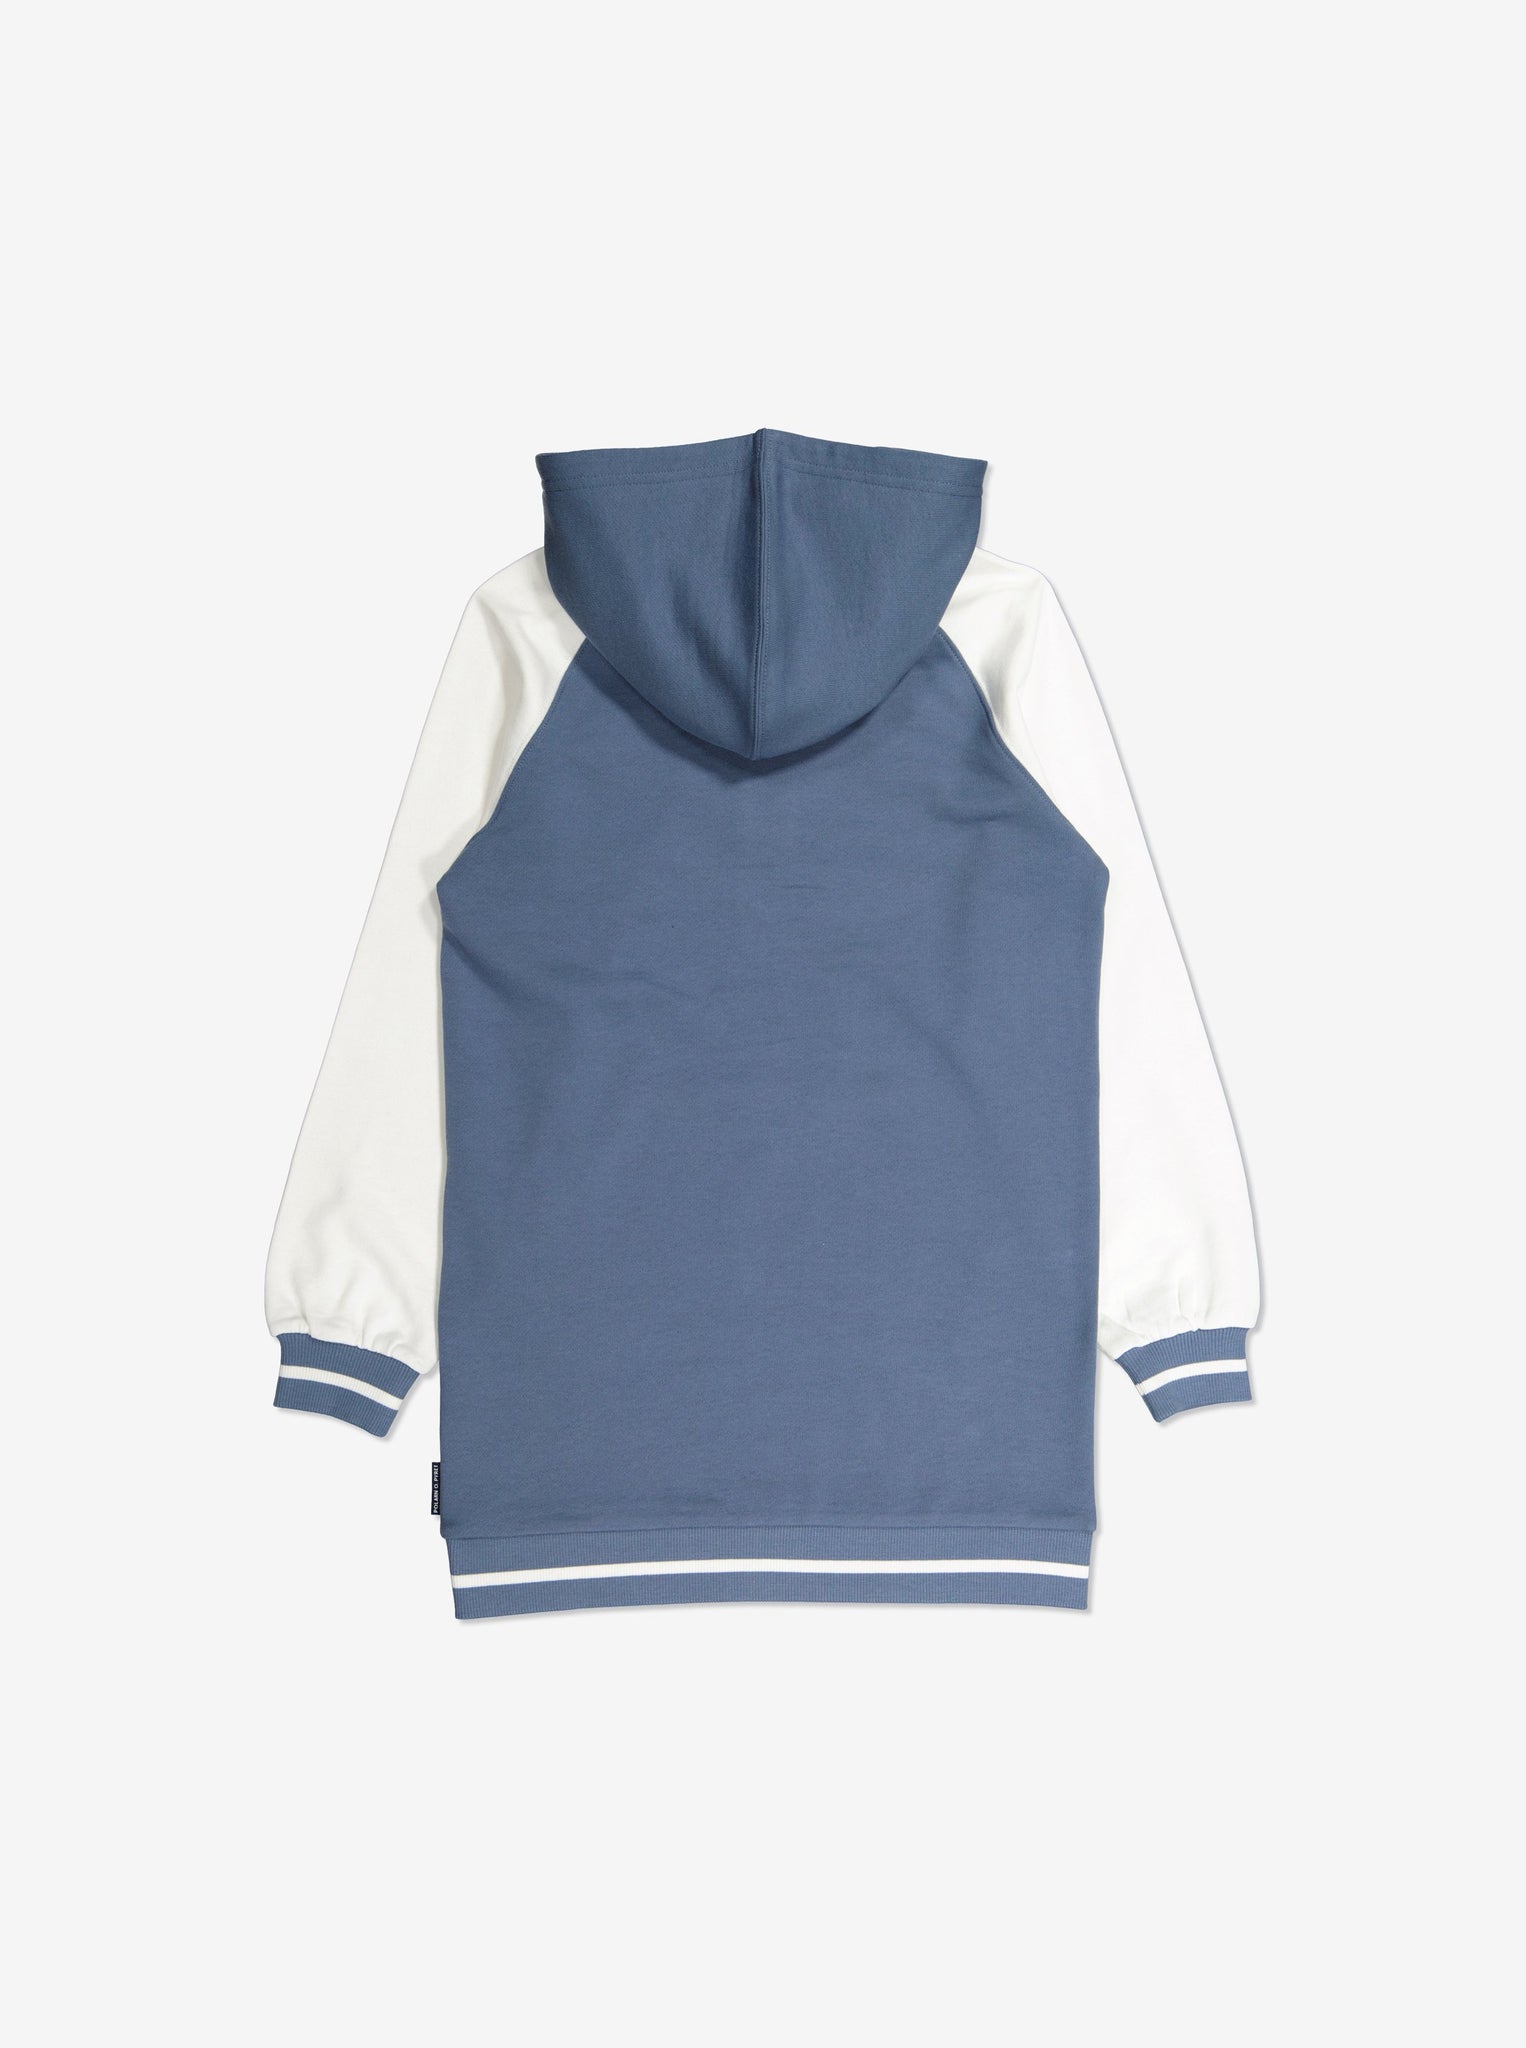  Organic Longline Blue Kids Sweatshirt from Polarn O. Pyret Kidswear. Made with 100% organic cotton.